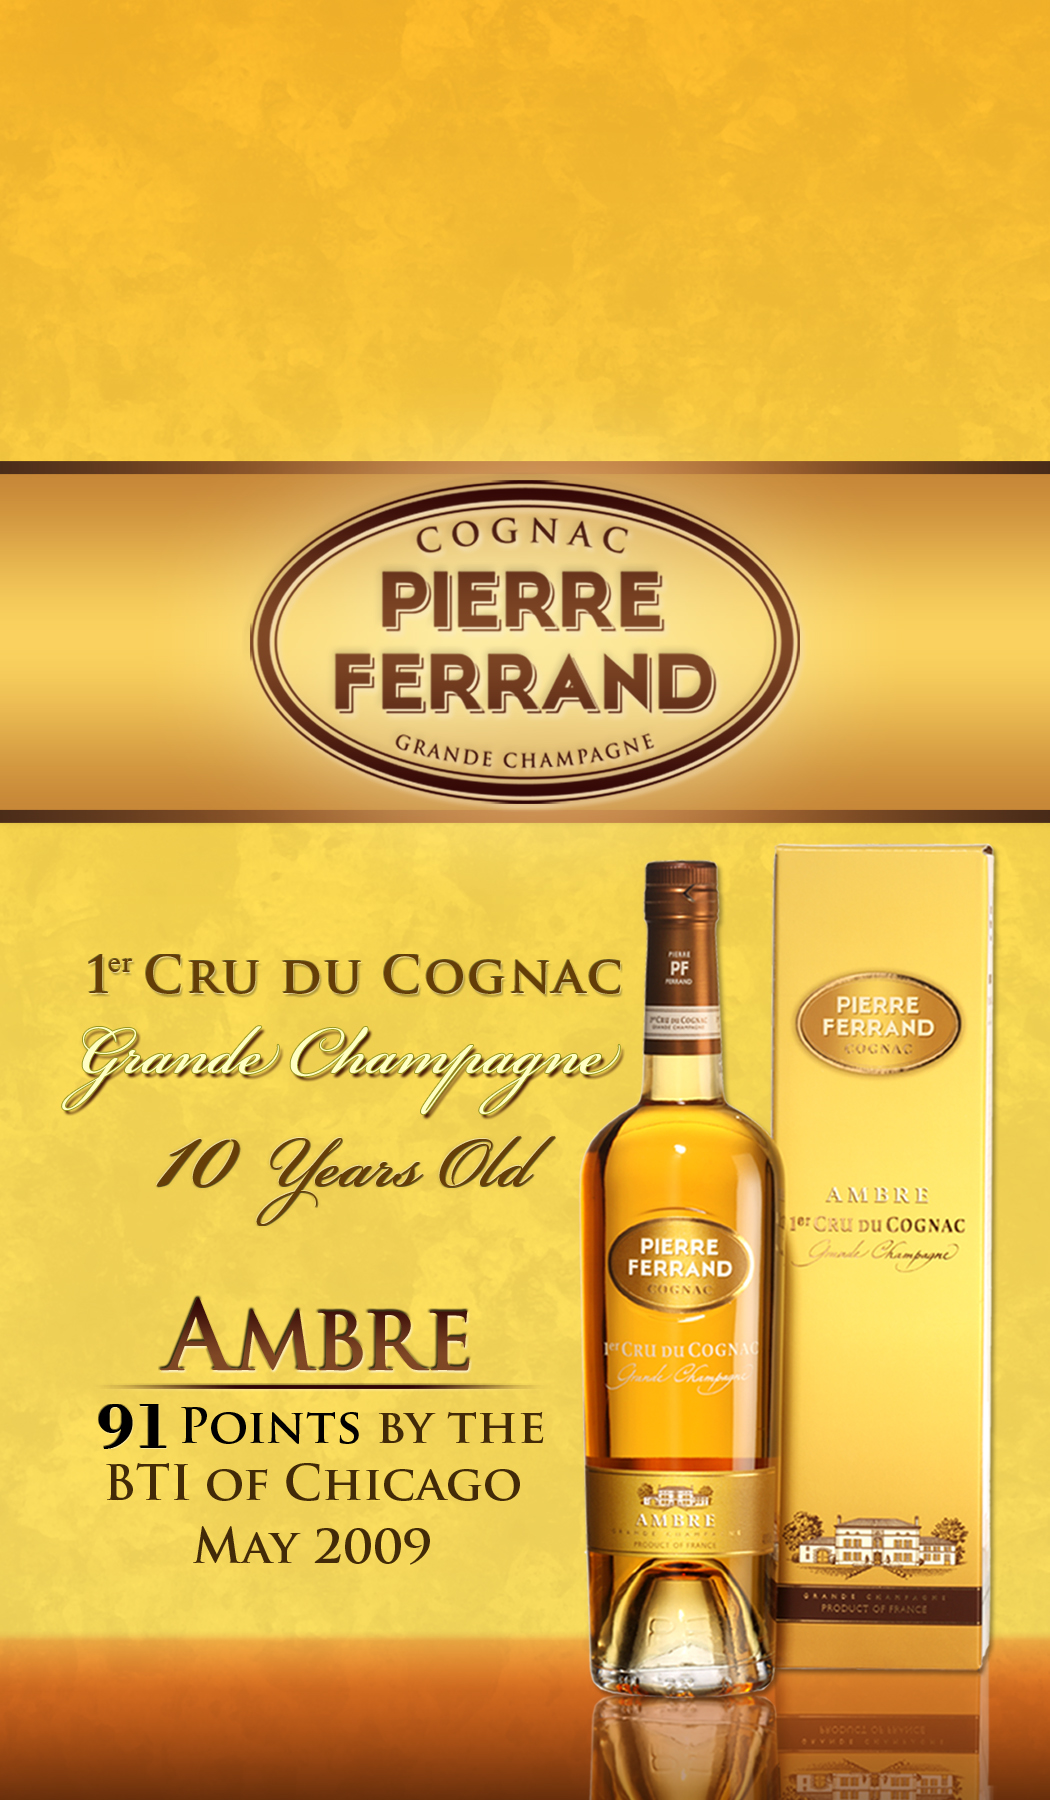 Pierre Ferrand Cognac Shelf Talkers Consistent Design